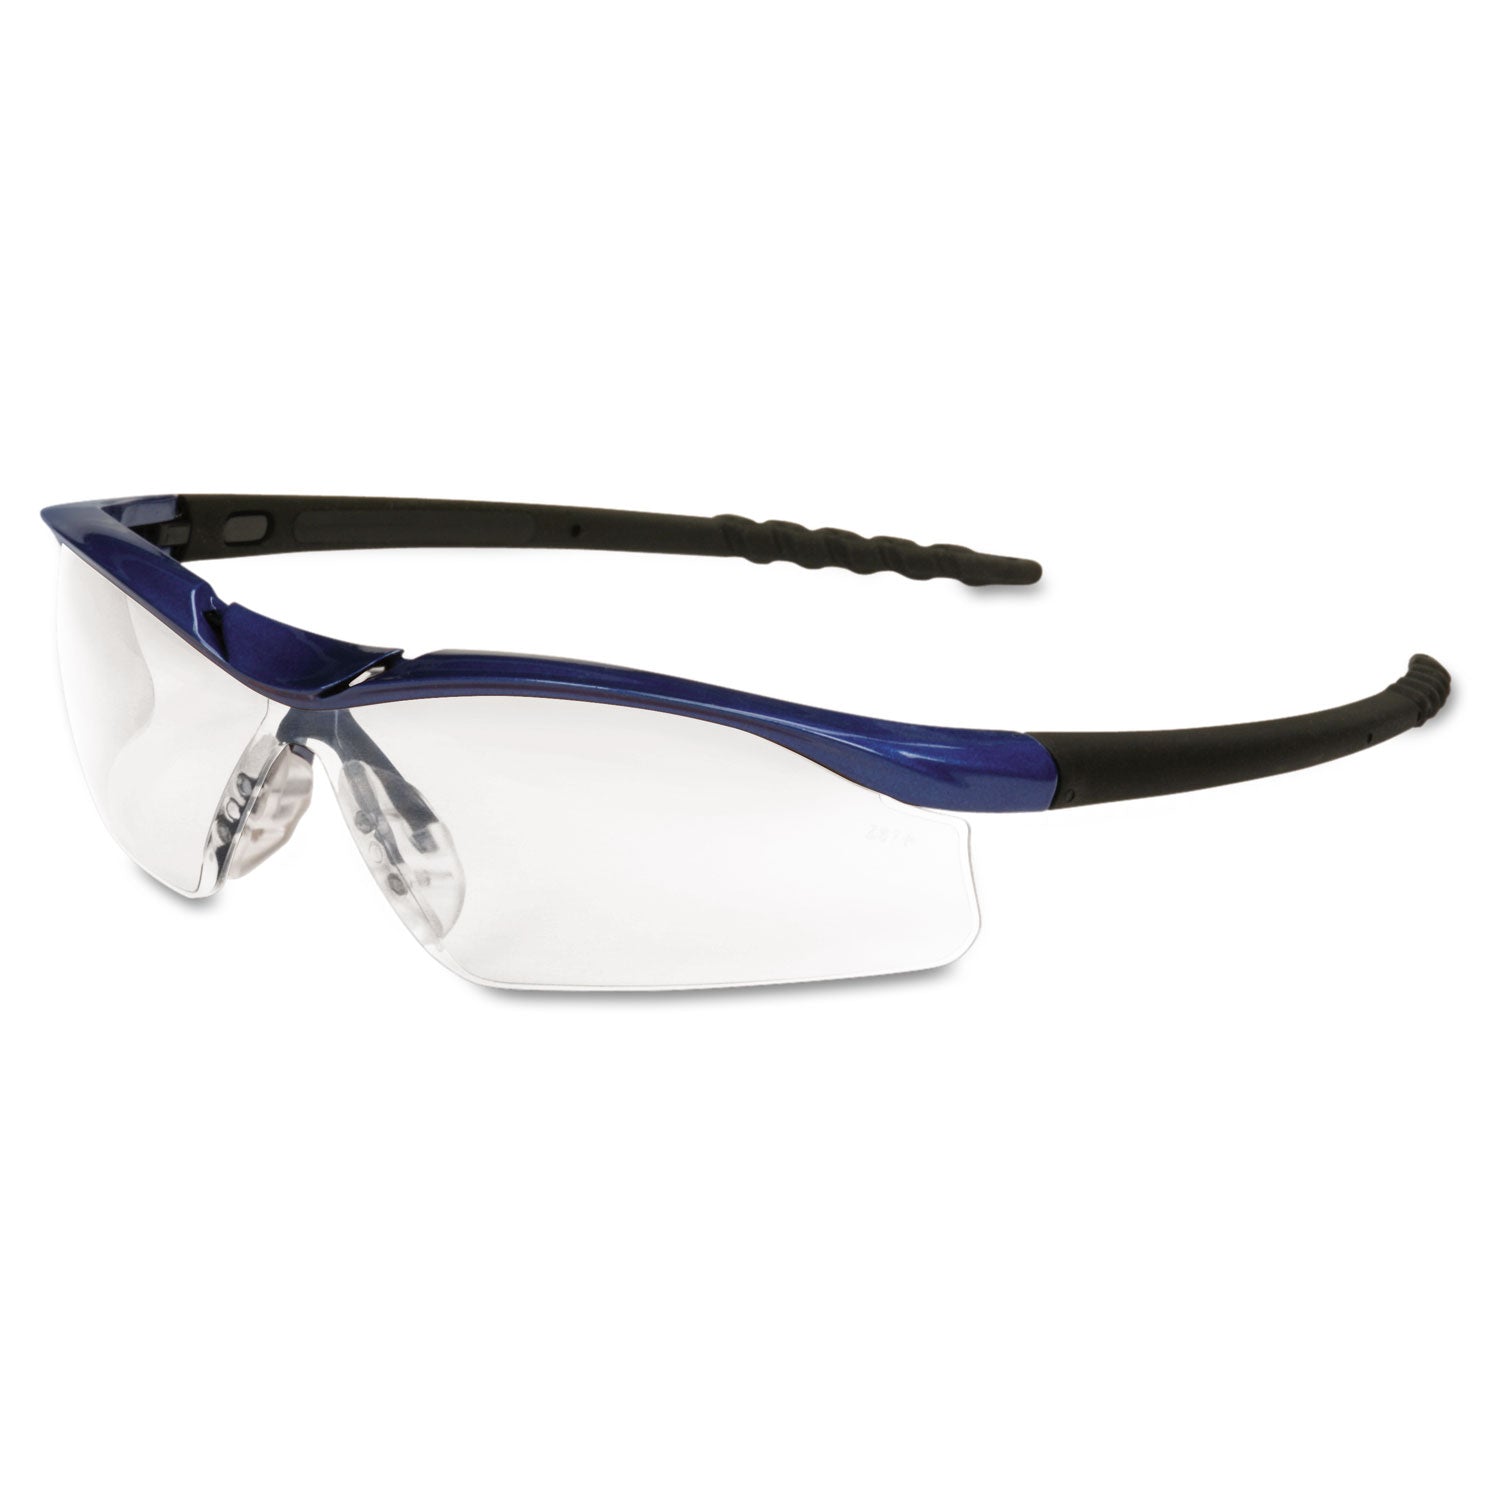 Dallas Wraparound Safety Glasses, Metallic Blue Frame, Clear Anti-Fog Lens - 